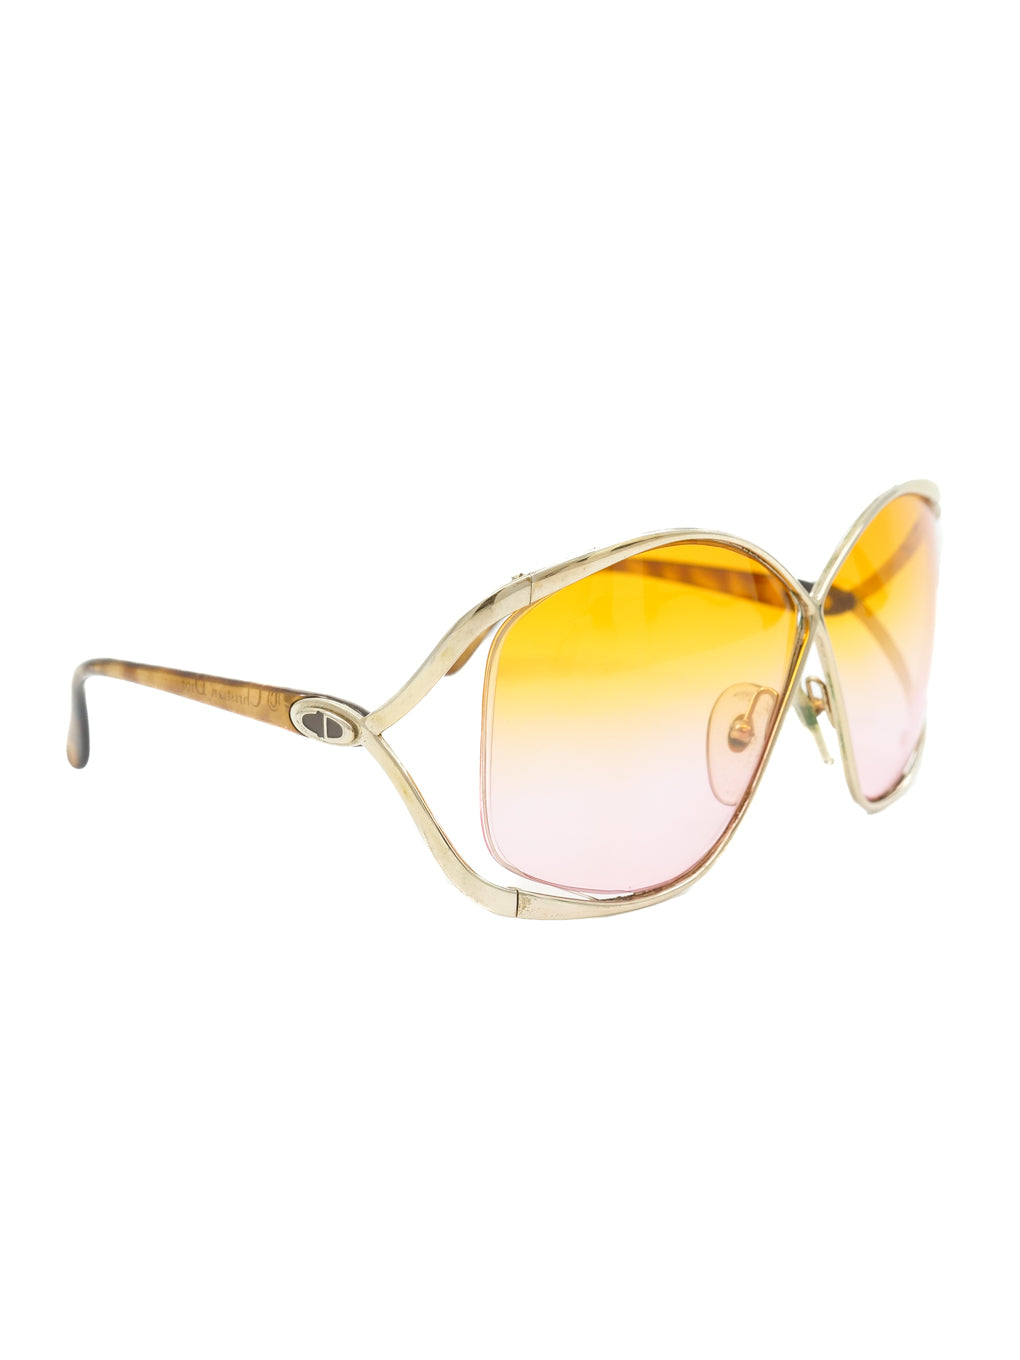 Christian Dior Orange Butterfly Sunglasses